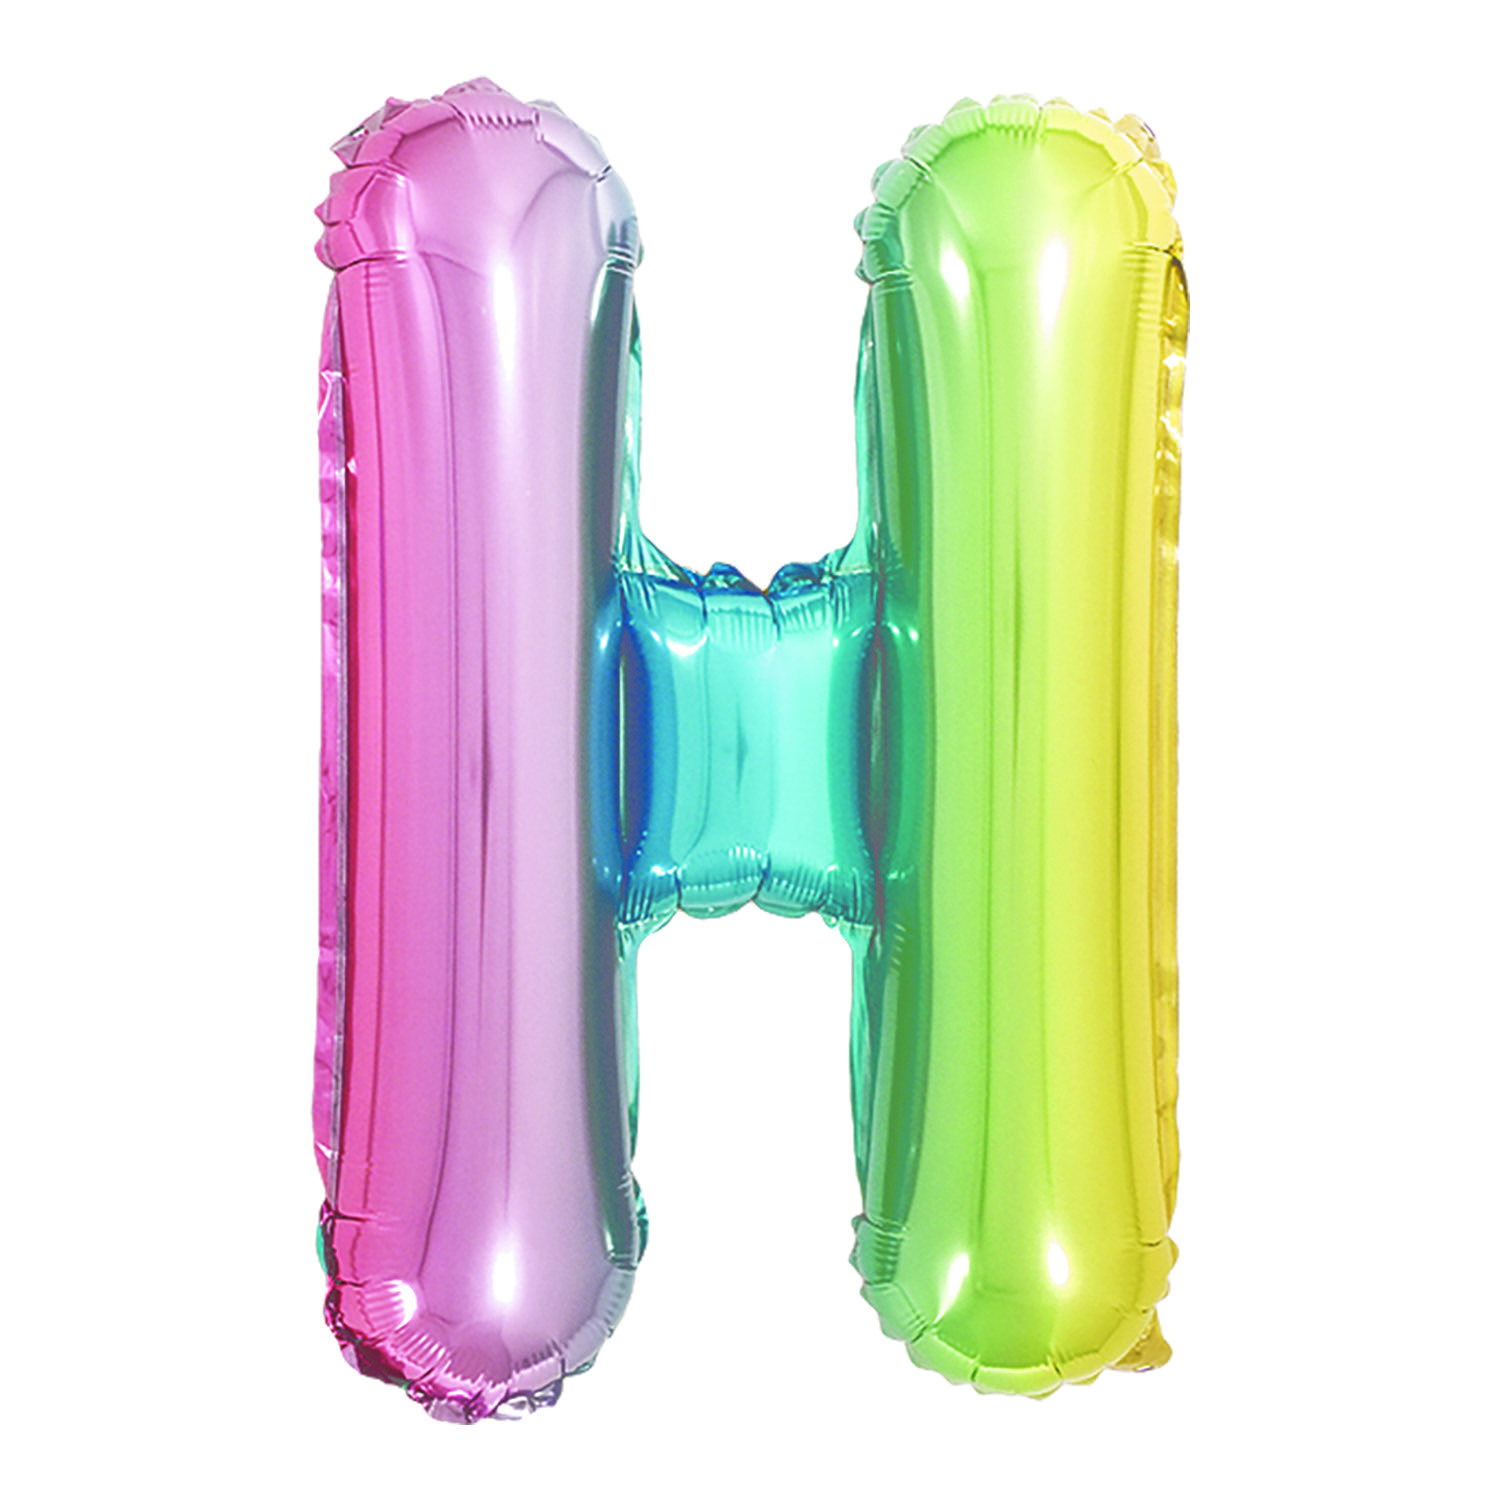 H arco iris 16 